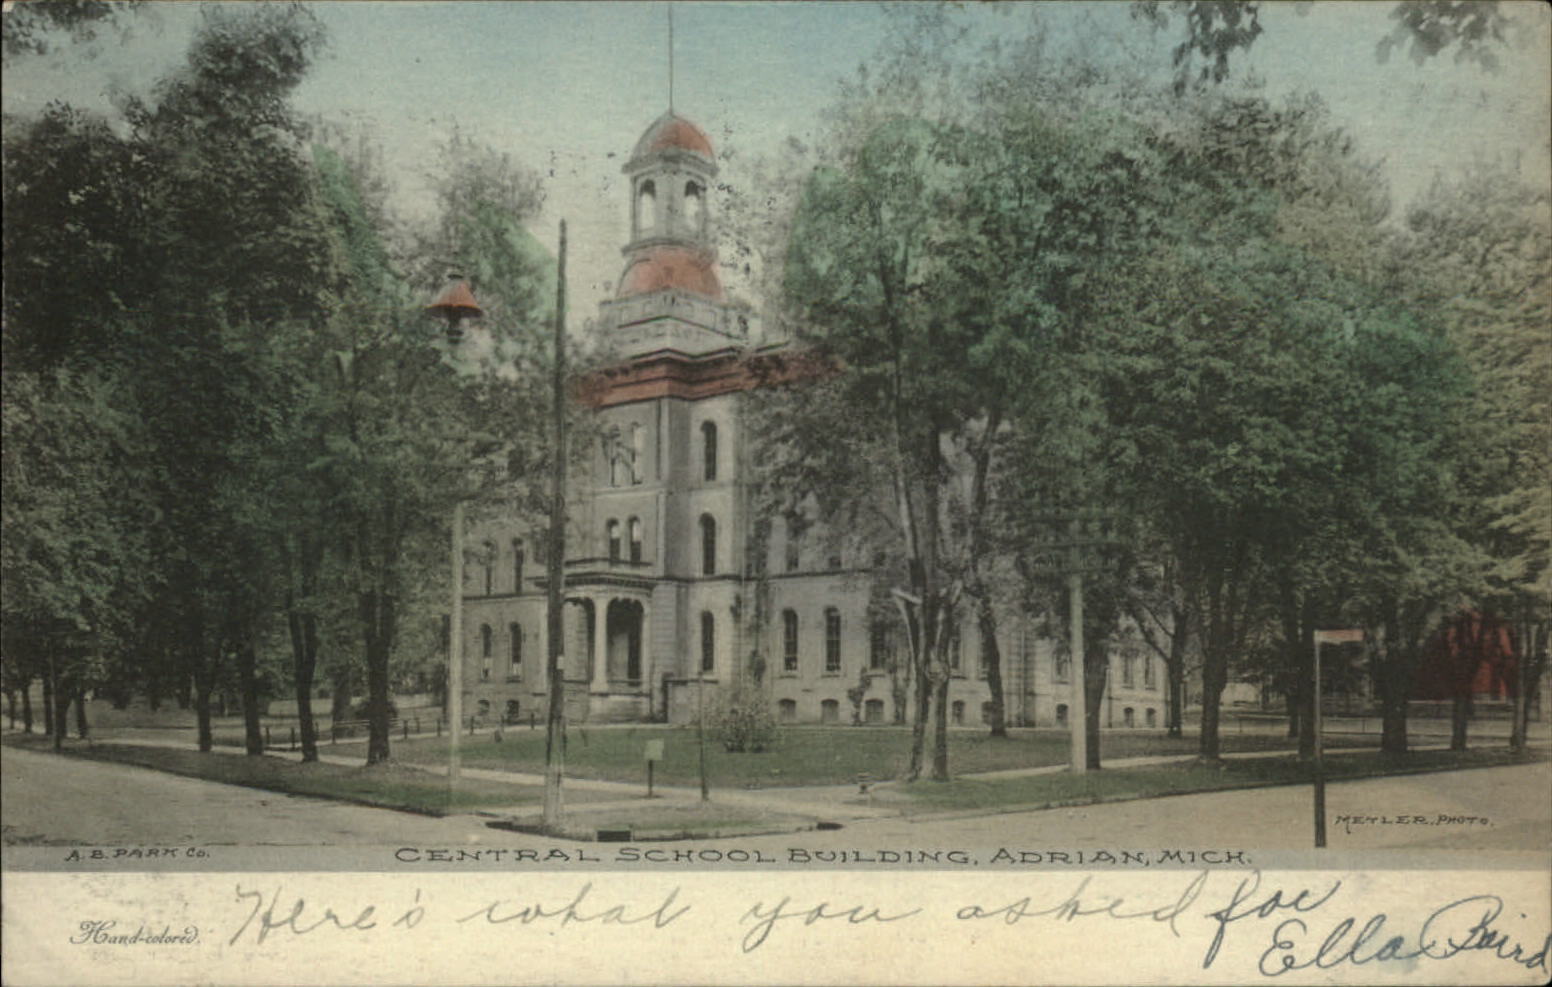 Adrian Michigan Central School Building hand colored 1907 postcard Camden NJ